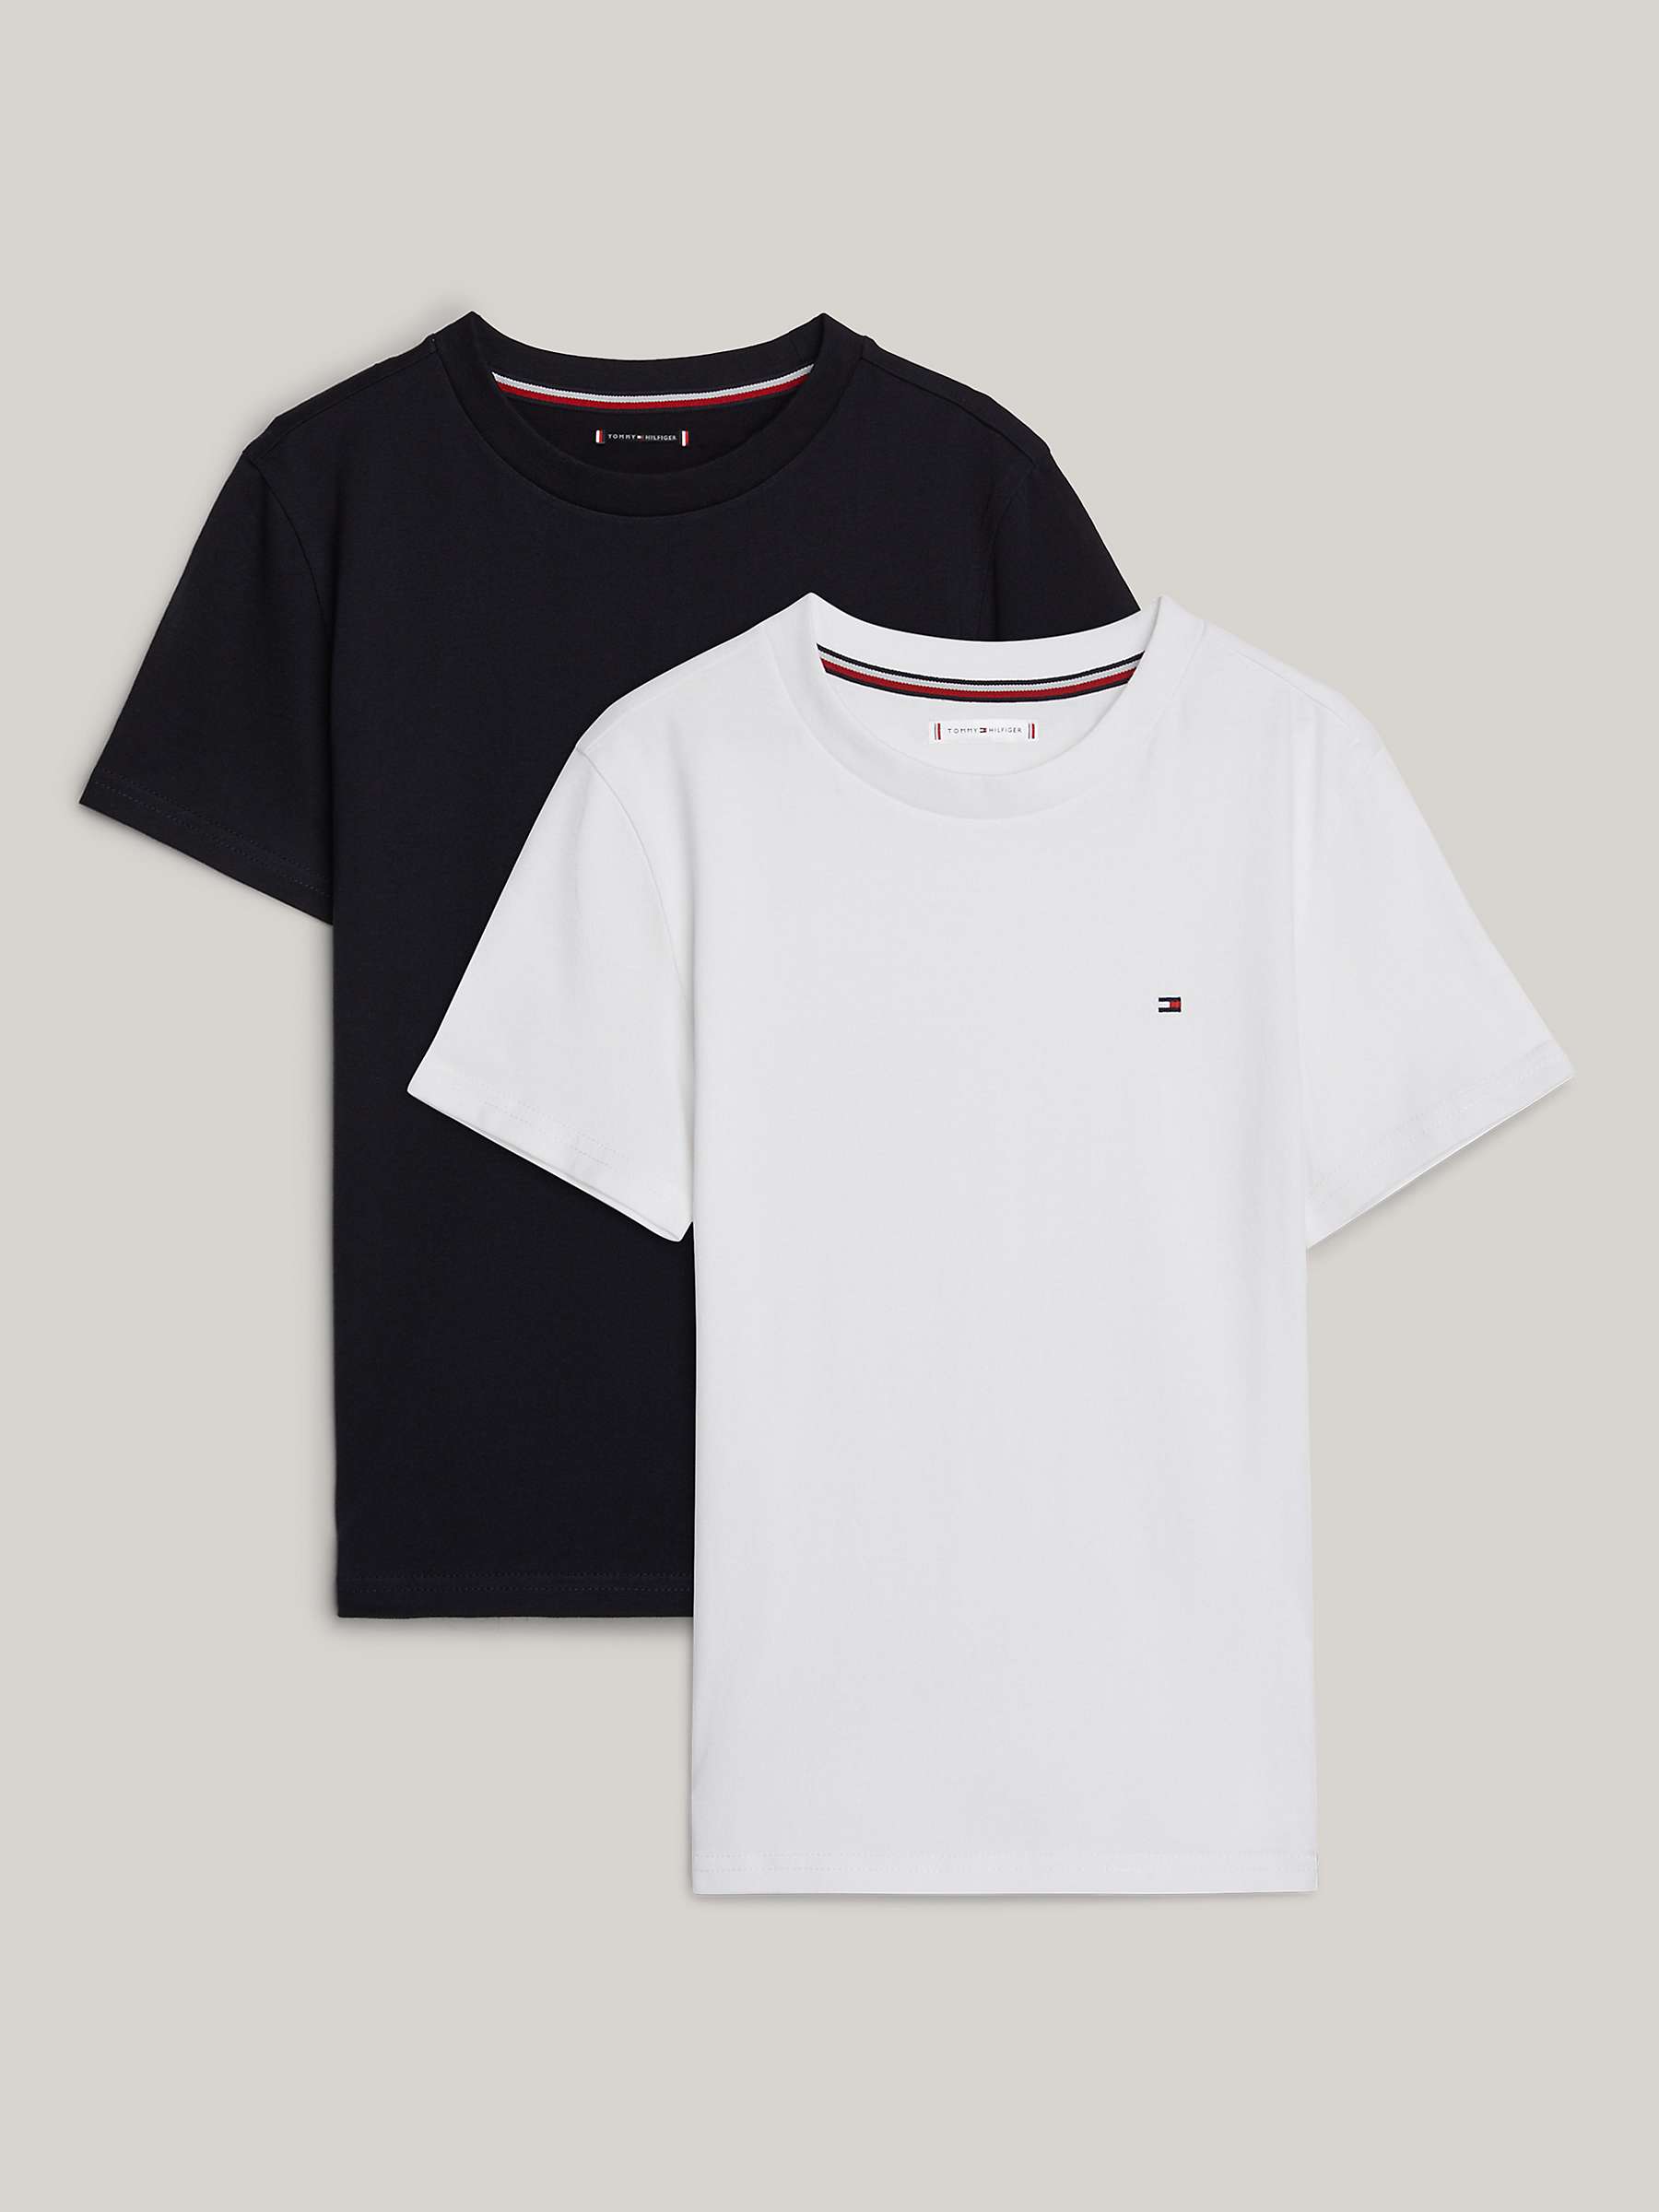 Kviksølv plantageejer overdraw Tommy Hilfiger Kids' Plain Logo T-Shirts, Pack of 2, Desert Sky/White at  John Lewis & Partners